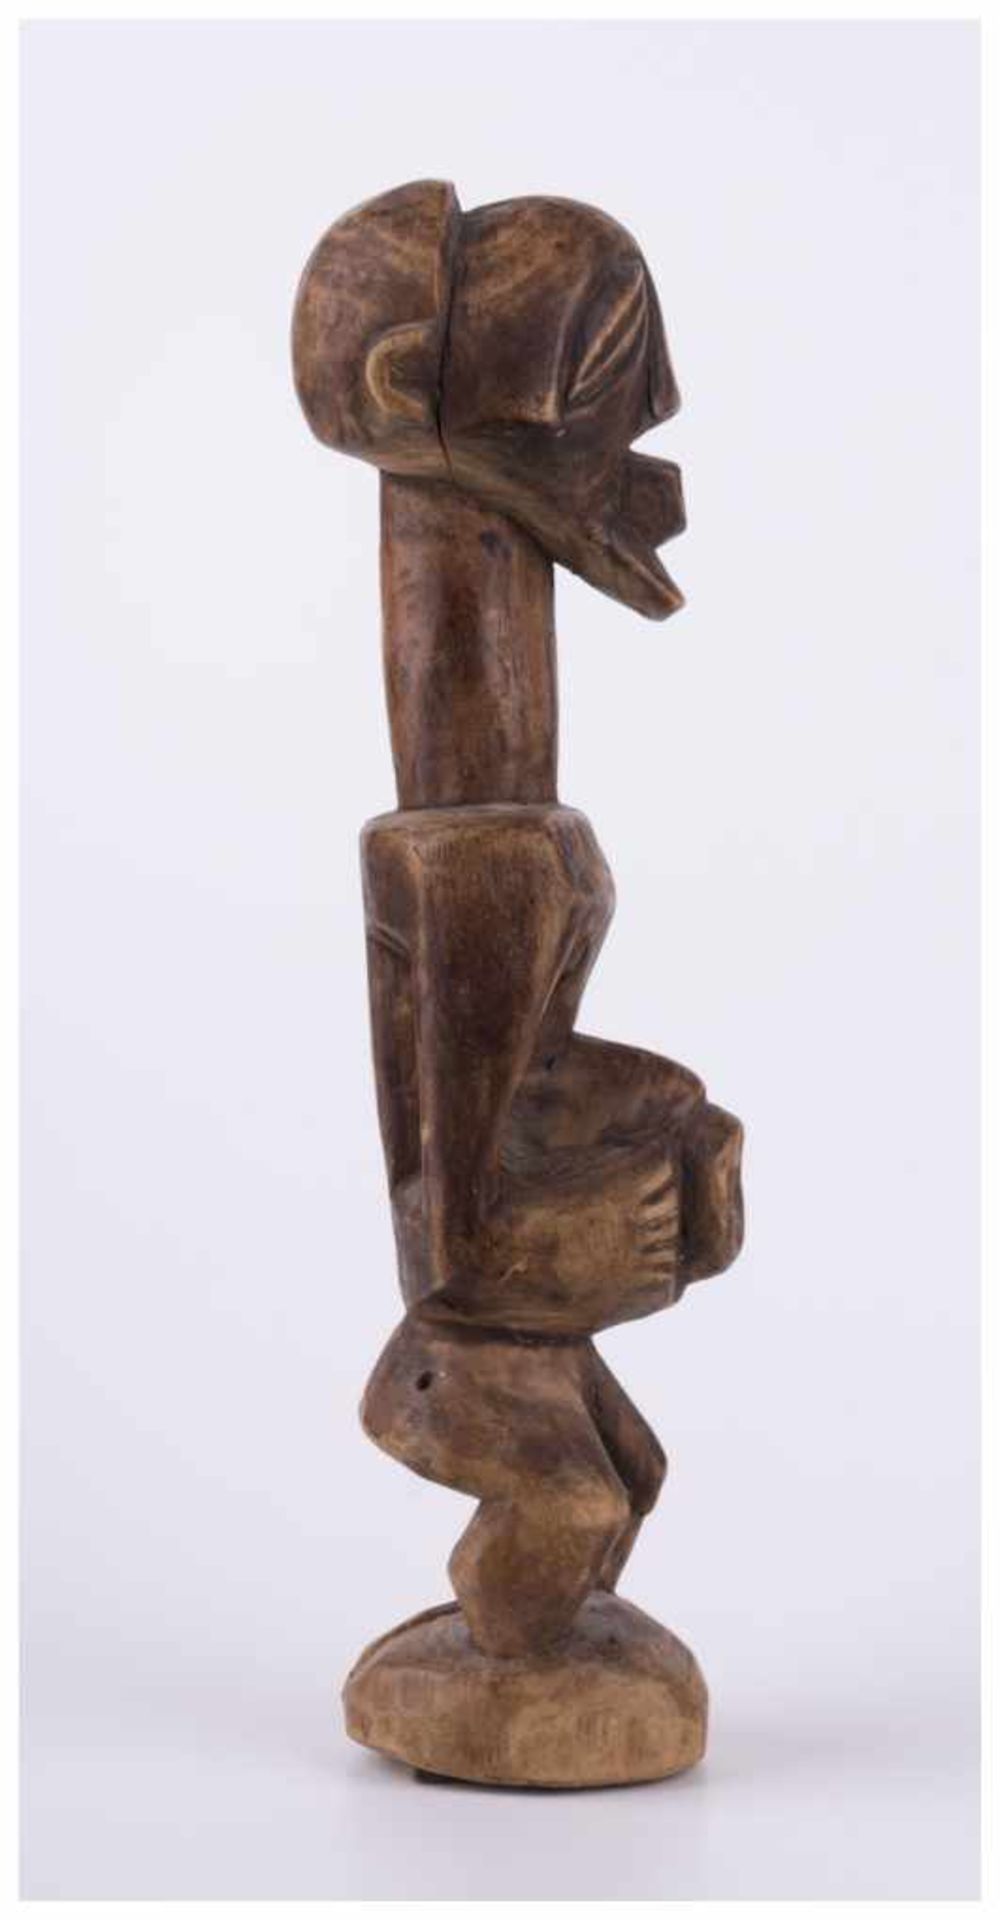 Fruchtbarkeits- Figur Afrika / Fertility figure, Africa - Holz, H: 29,5 cm - [...] - Bild 6 aus 8